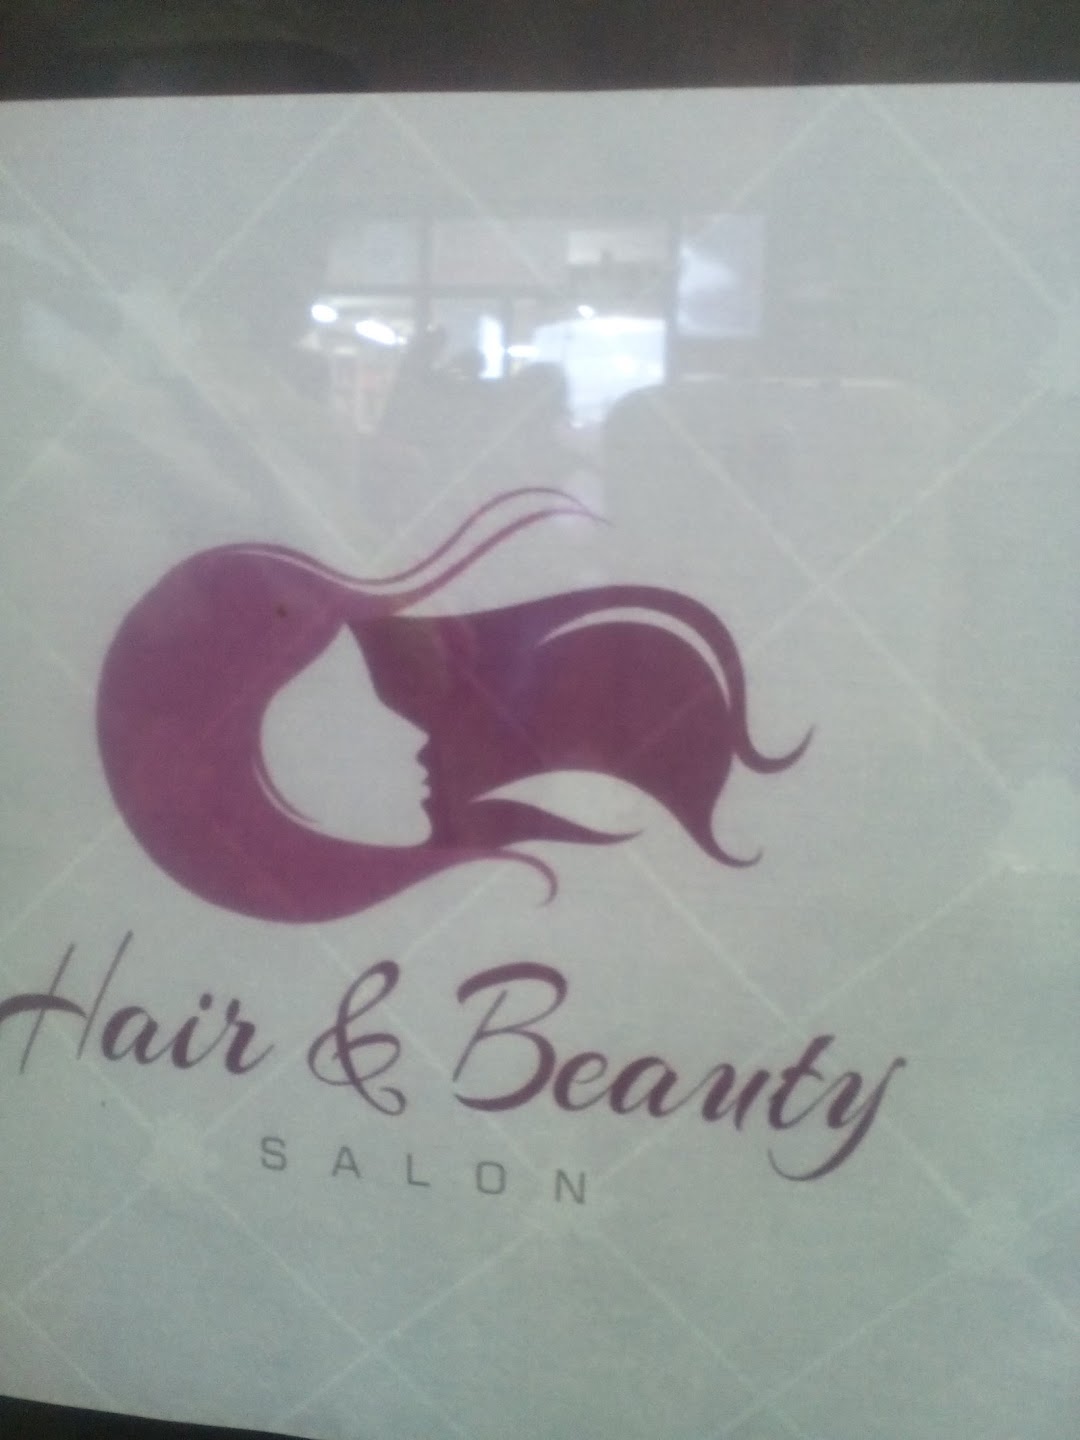 Ullus Hair & Beauty Salon